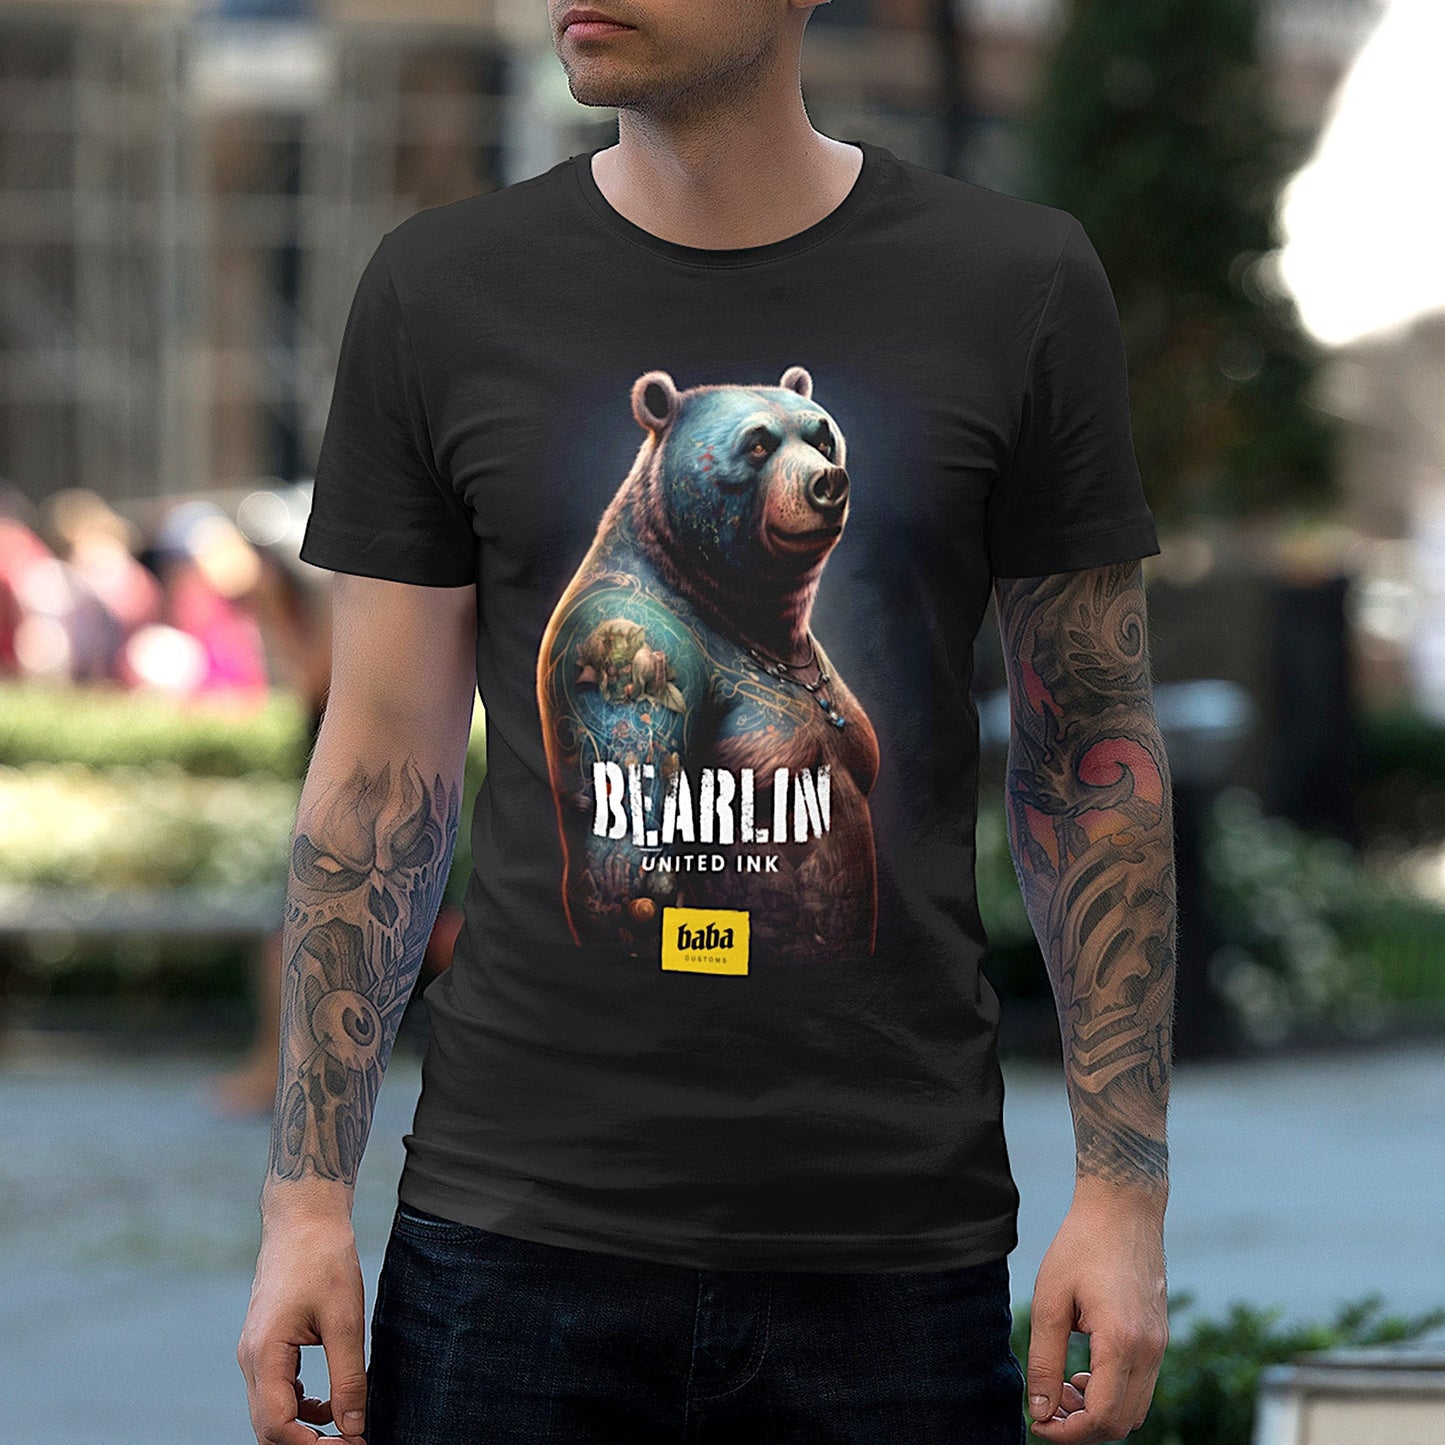 Organic T-Shirt »Bearlin United Ink« unisex - Baba Customs®